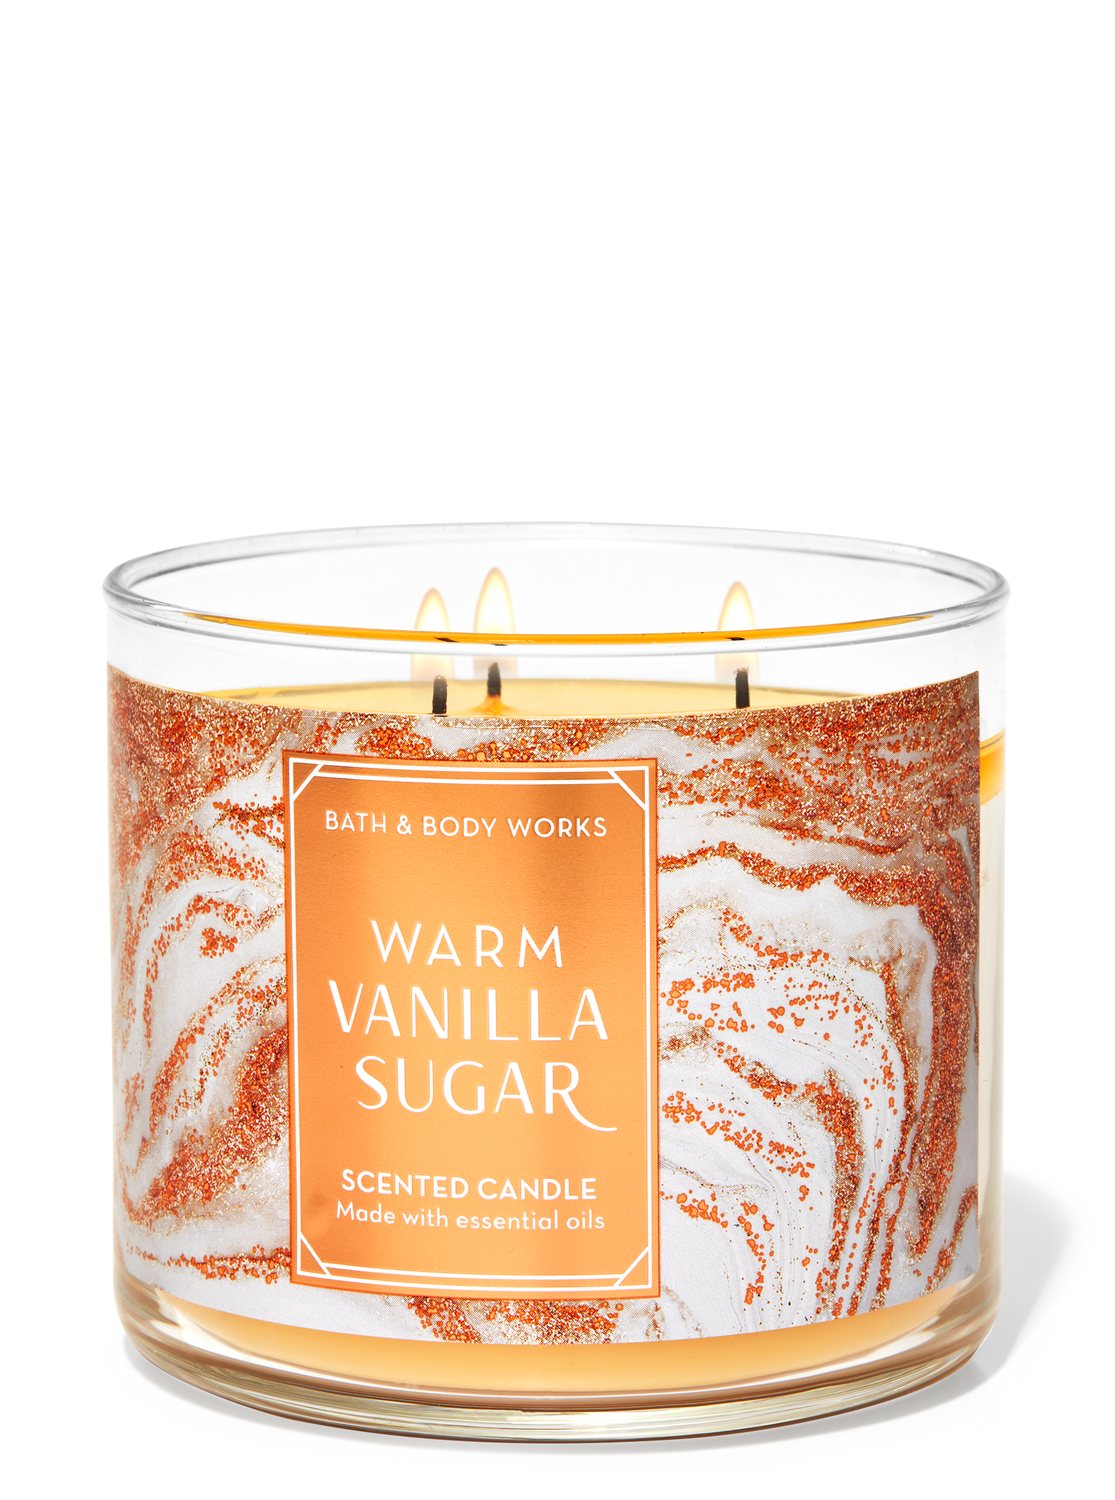 Warm Vanilla Sugar 3Wick Candle Bath & Body Works Australia Official